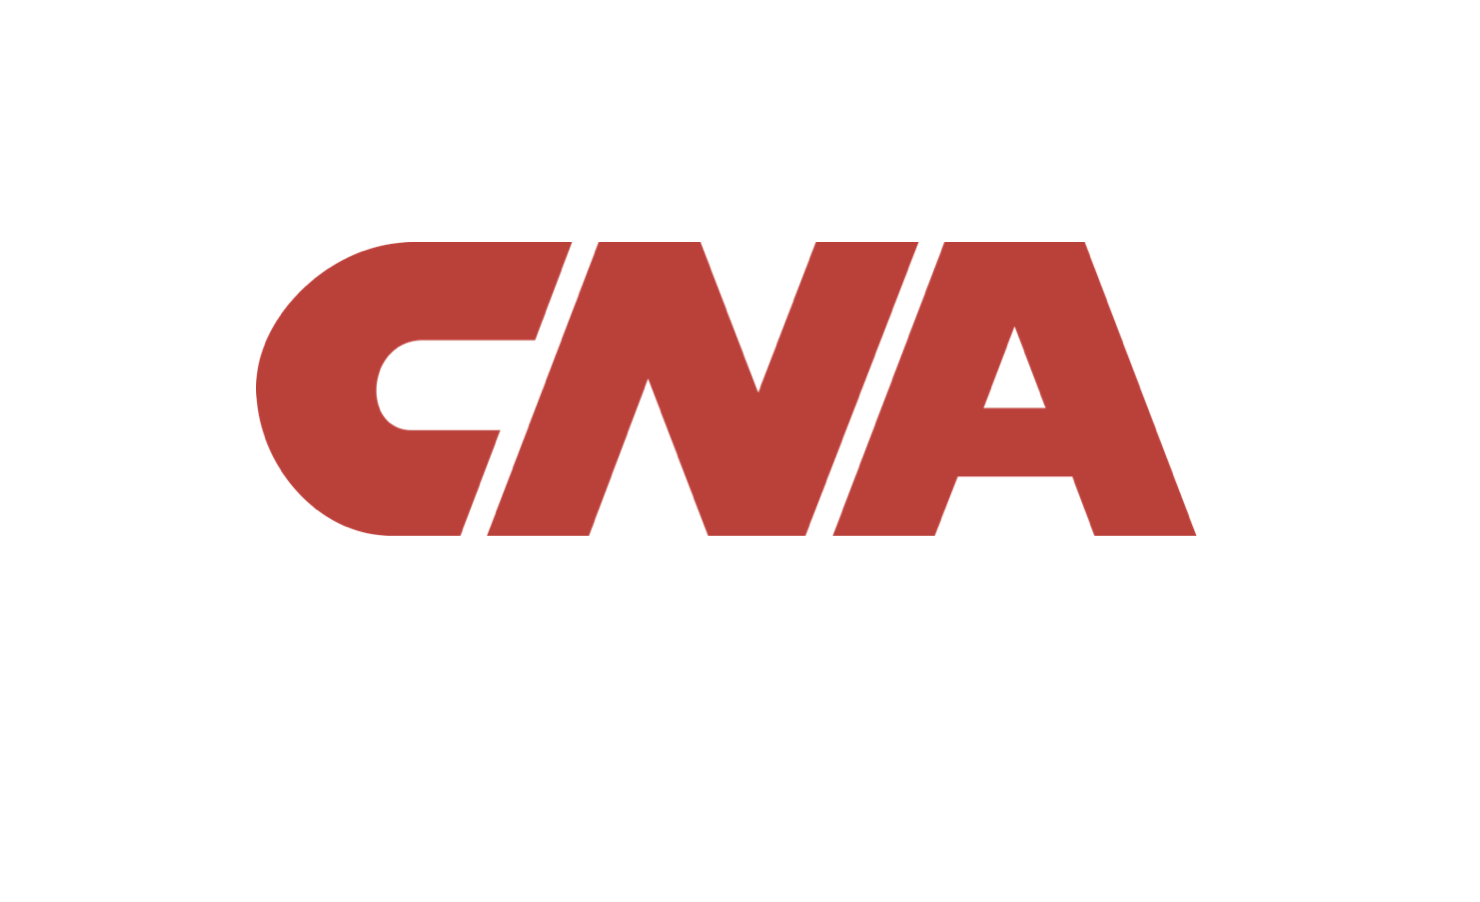  CNA Insurance Logo   Image Text: CNA  